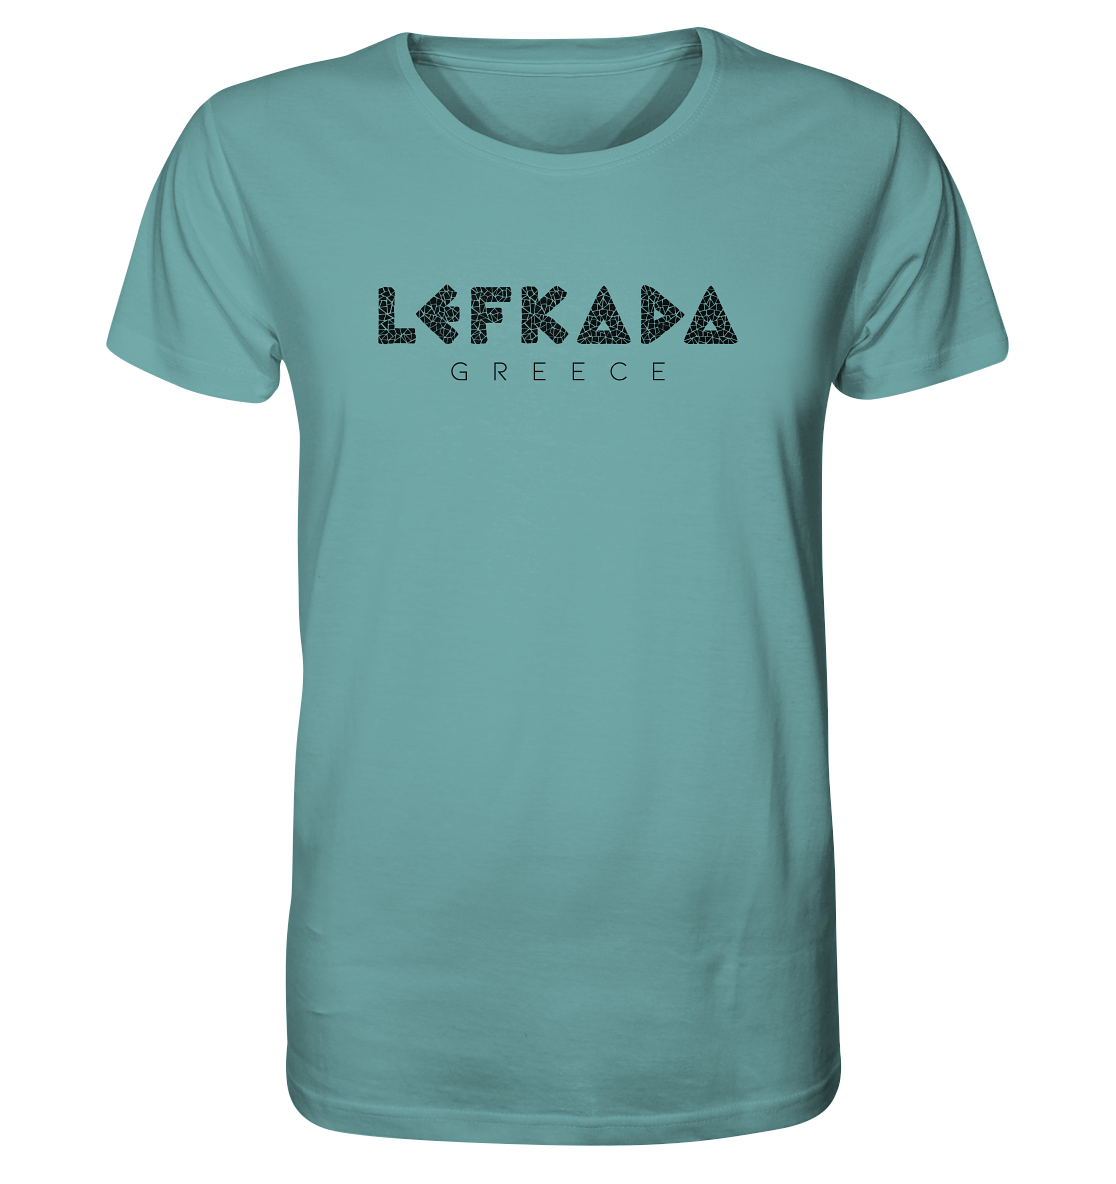 Lefkada Greece Mosaik - Organic Shirt